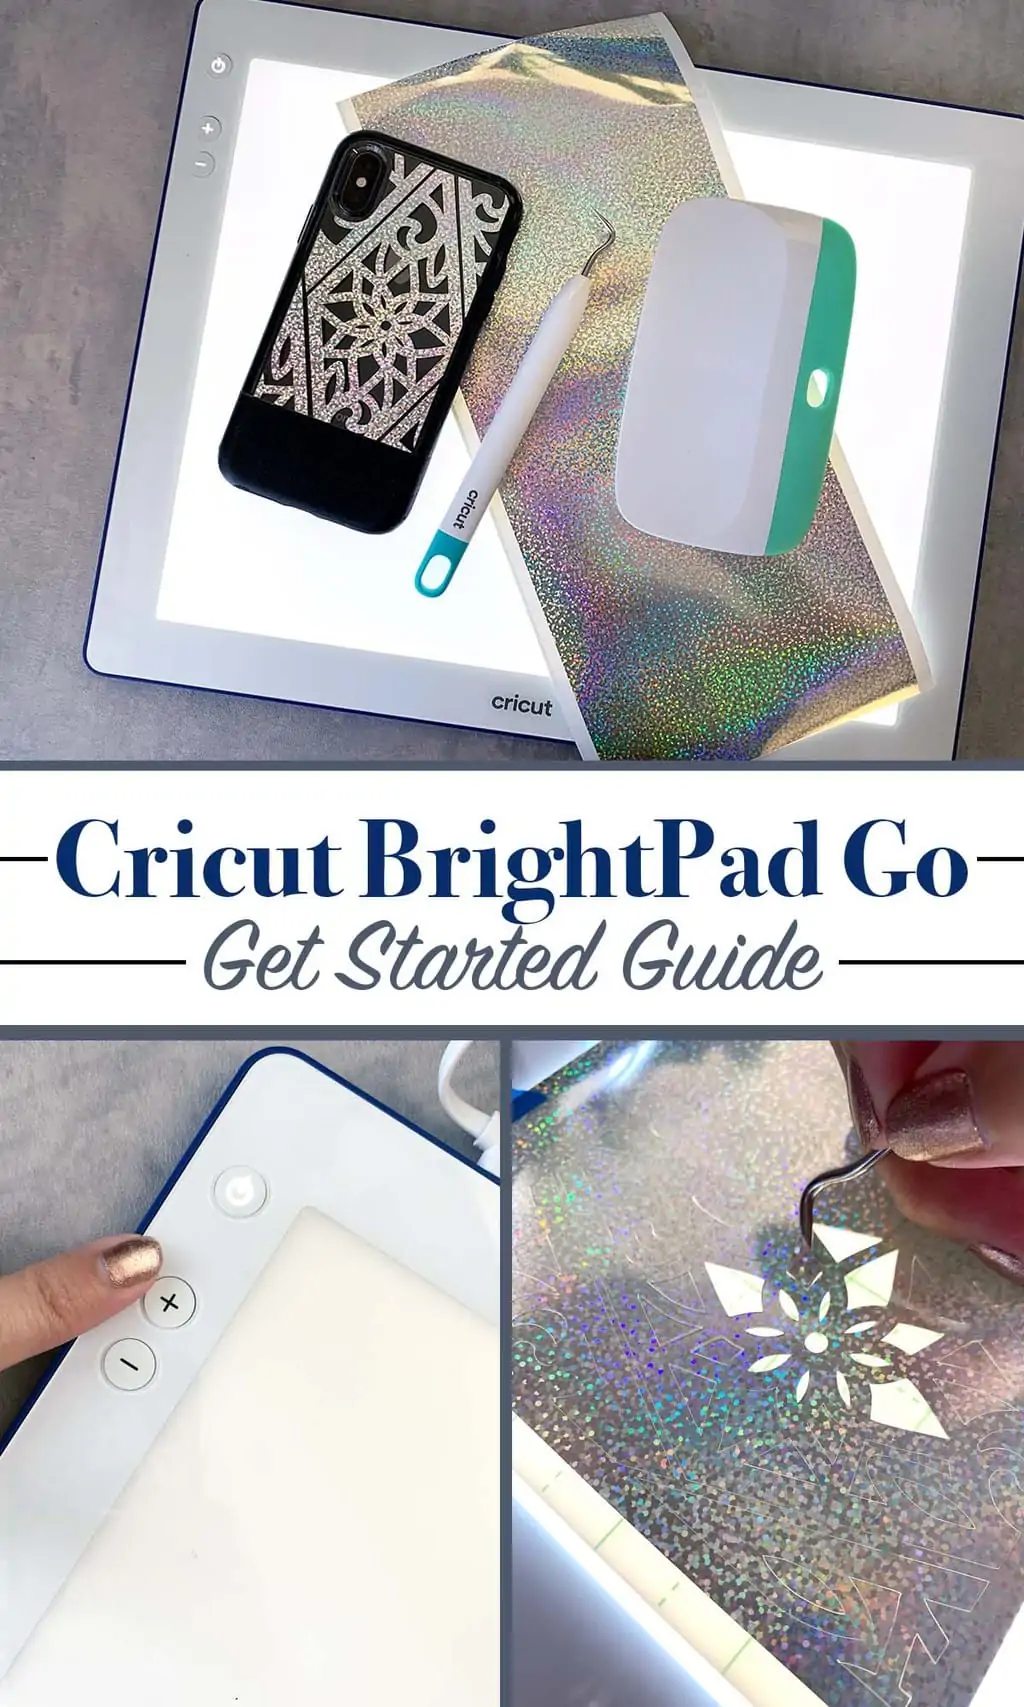 Cricut BrightPad Go get started guide